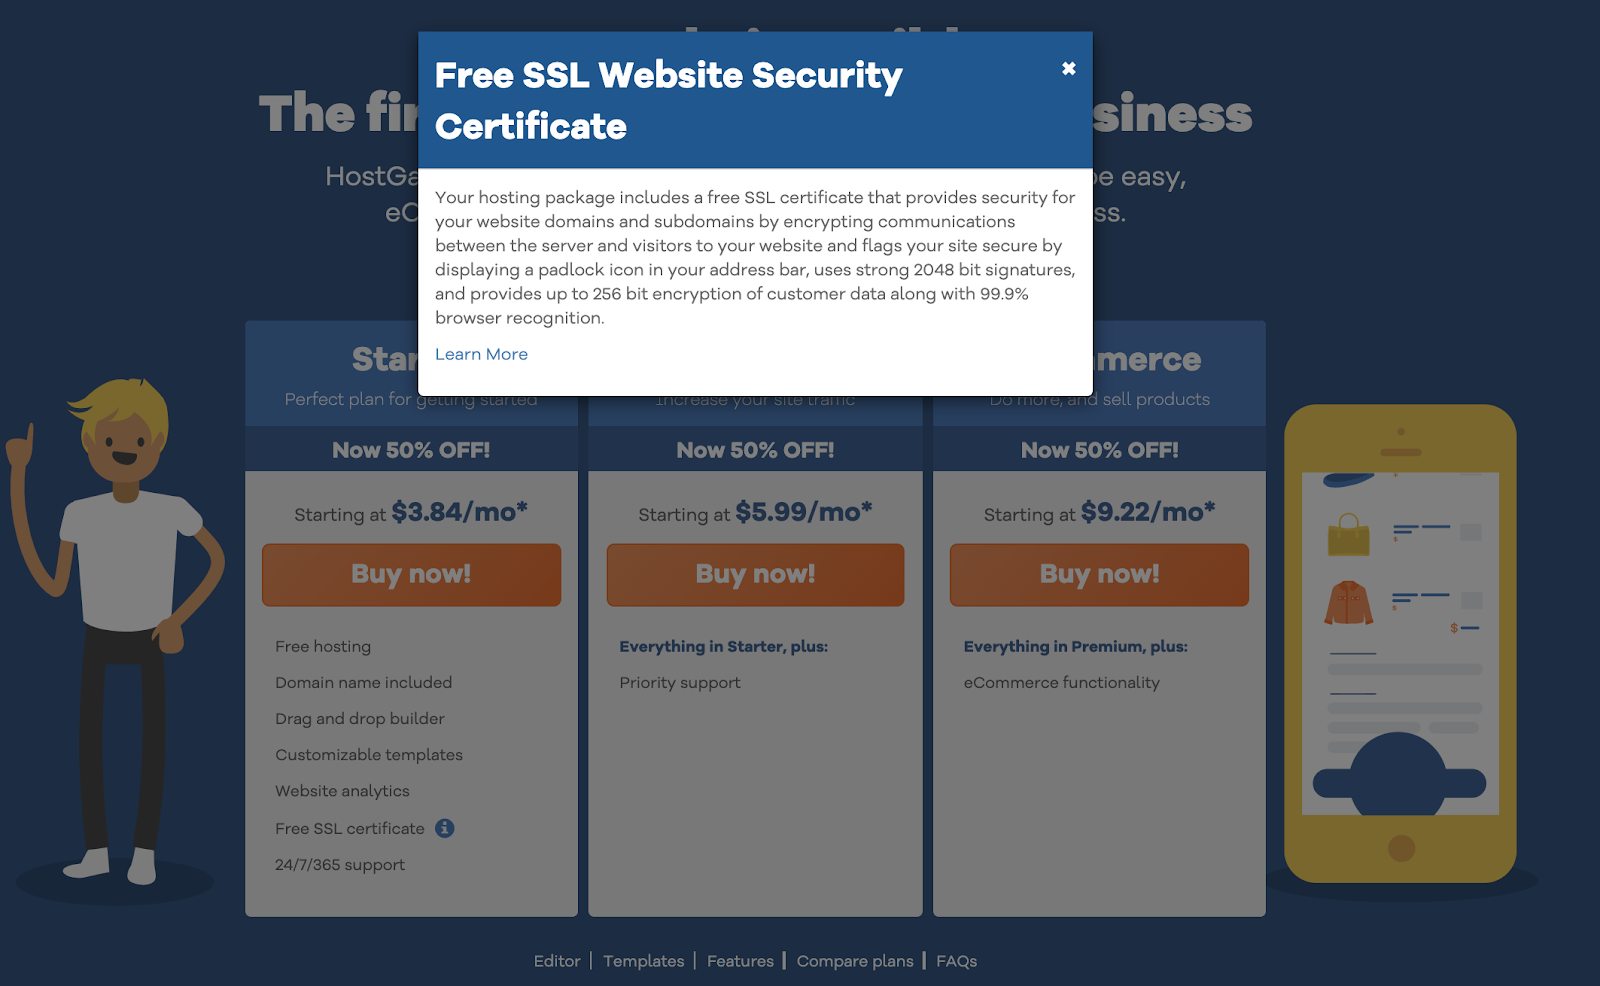 hostgator ecommerce hosting includes free ssl security certificate